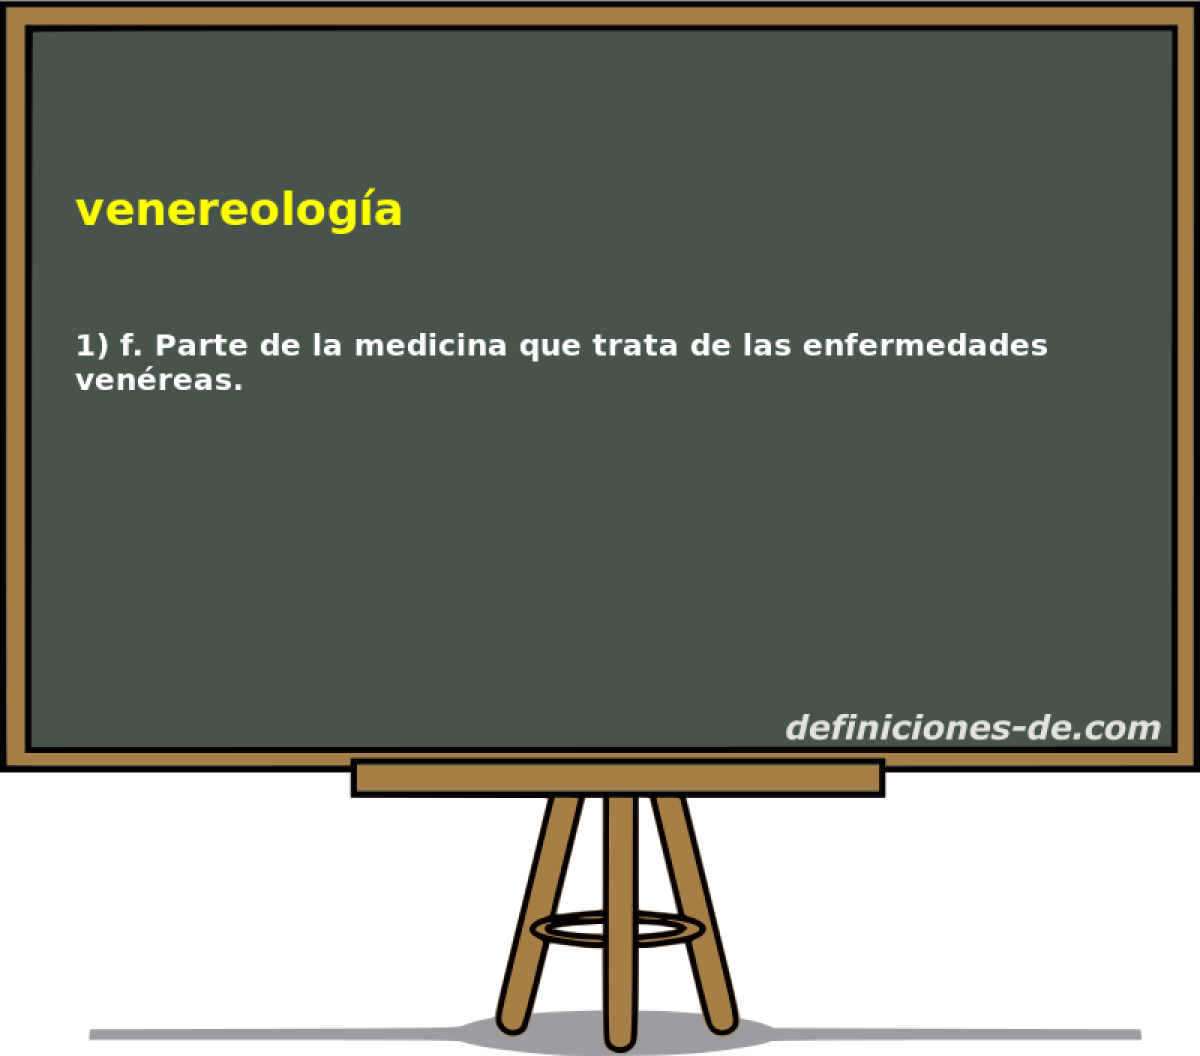 venereologa 